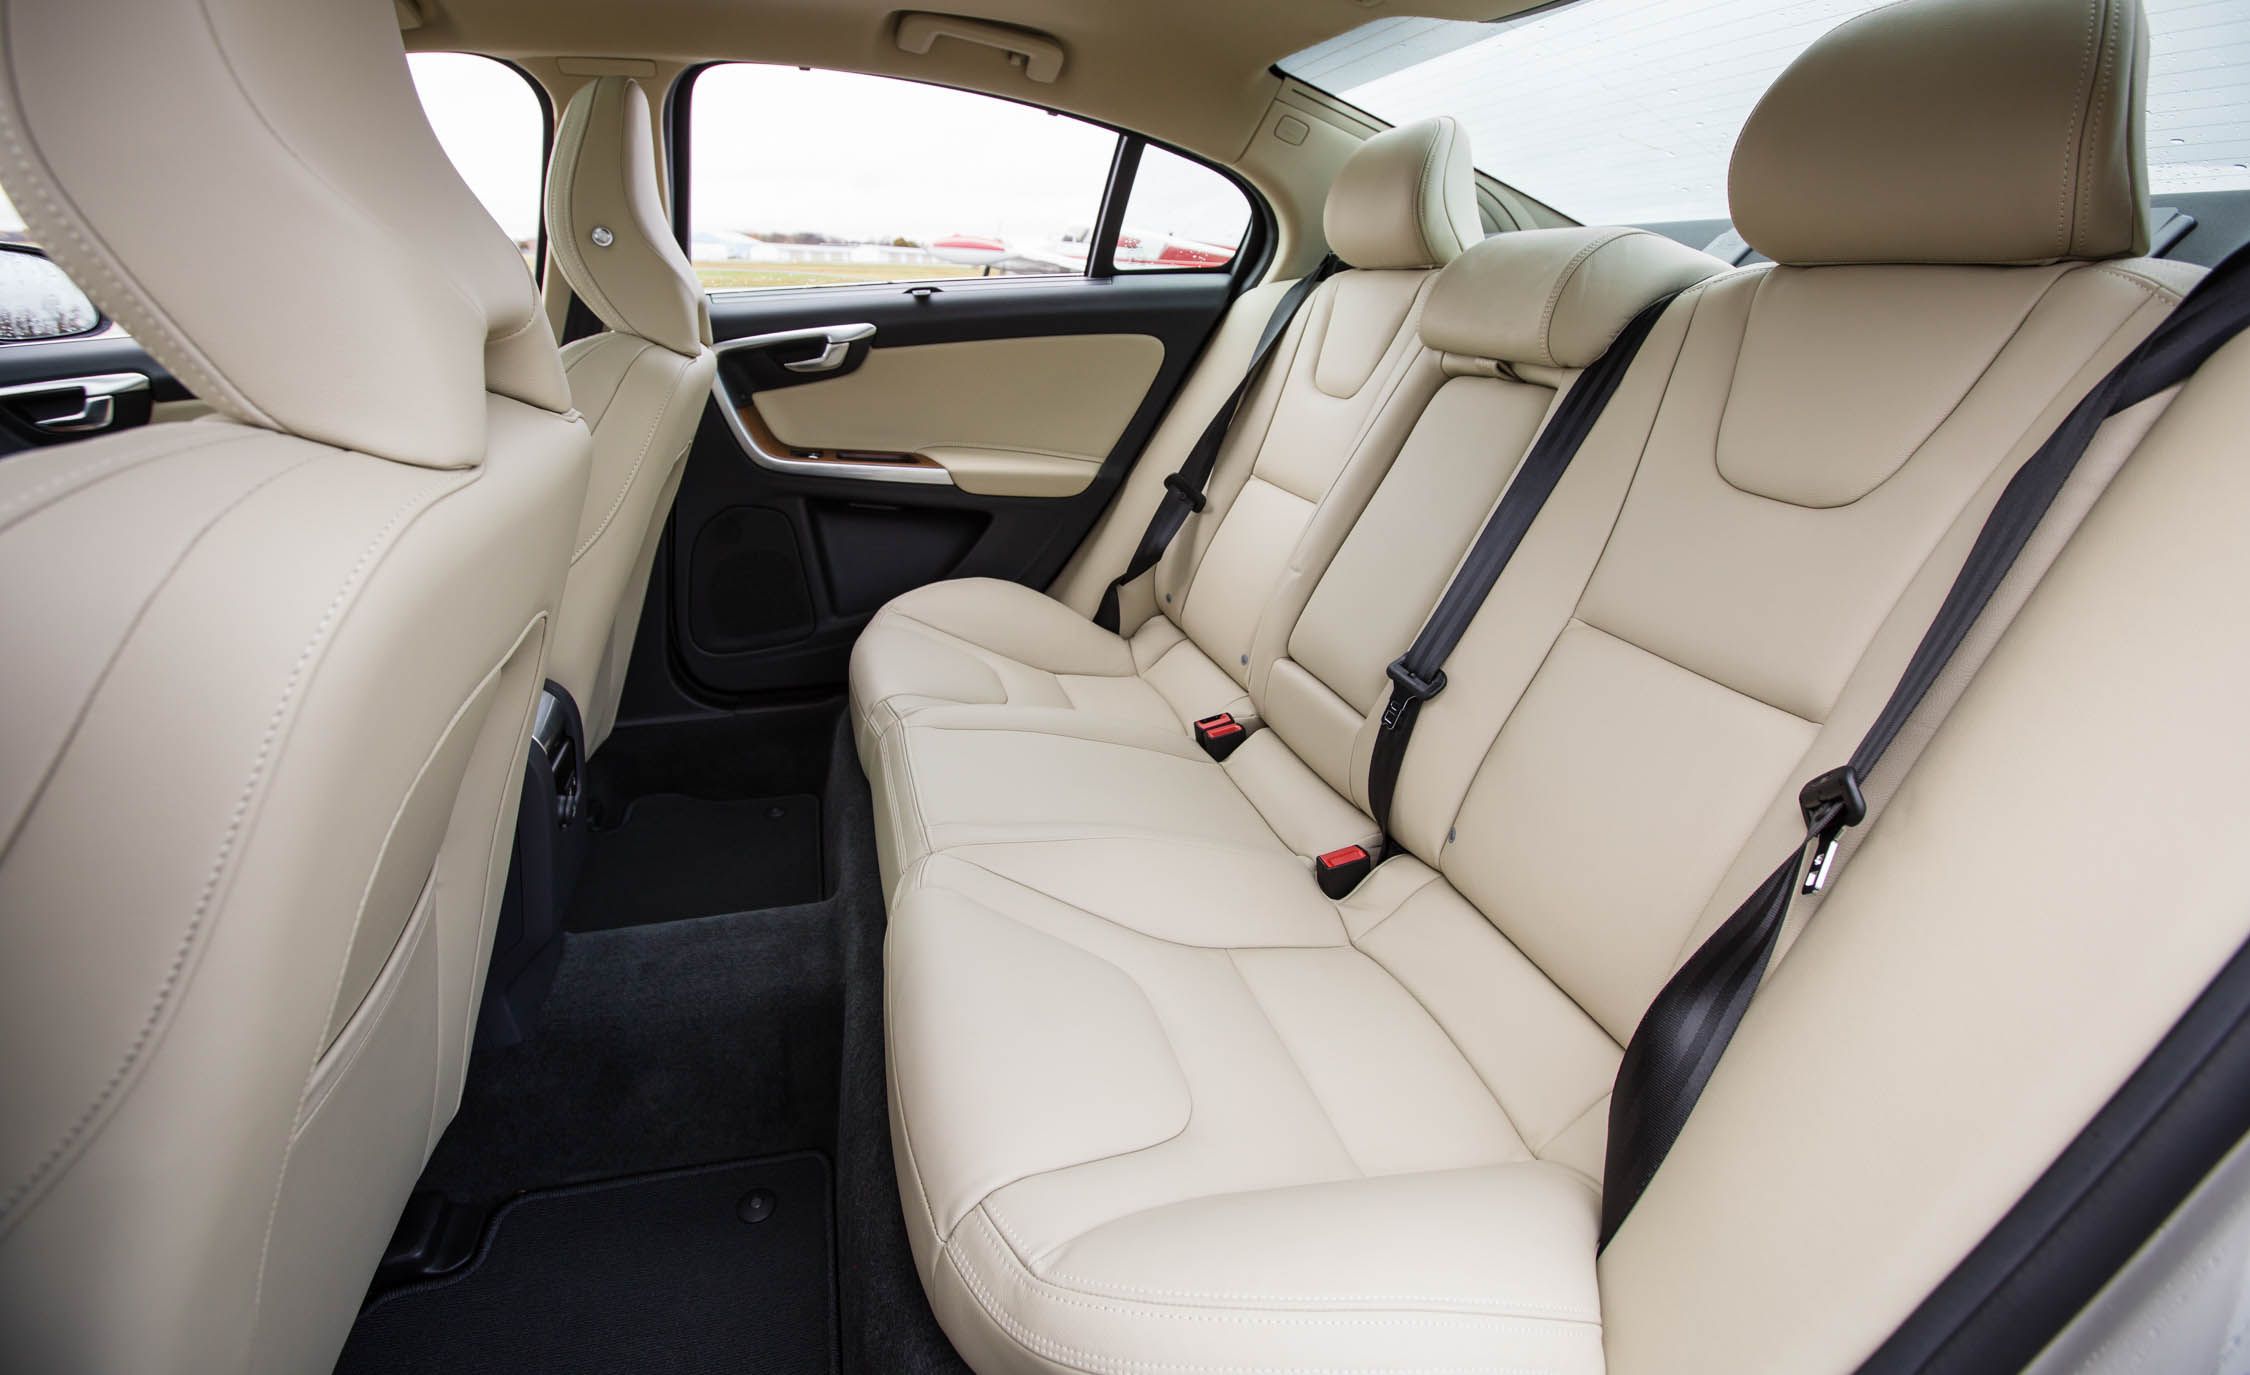 2016 Volvo S60 T5 Inscription Interior Passenger Seats Rear (View 2 of 28)